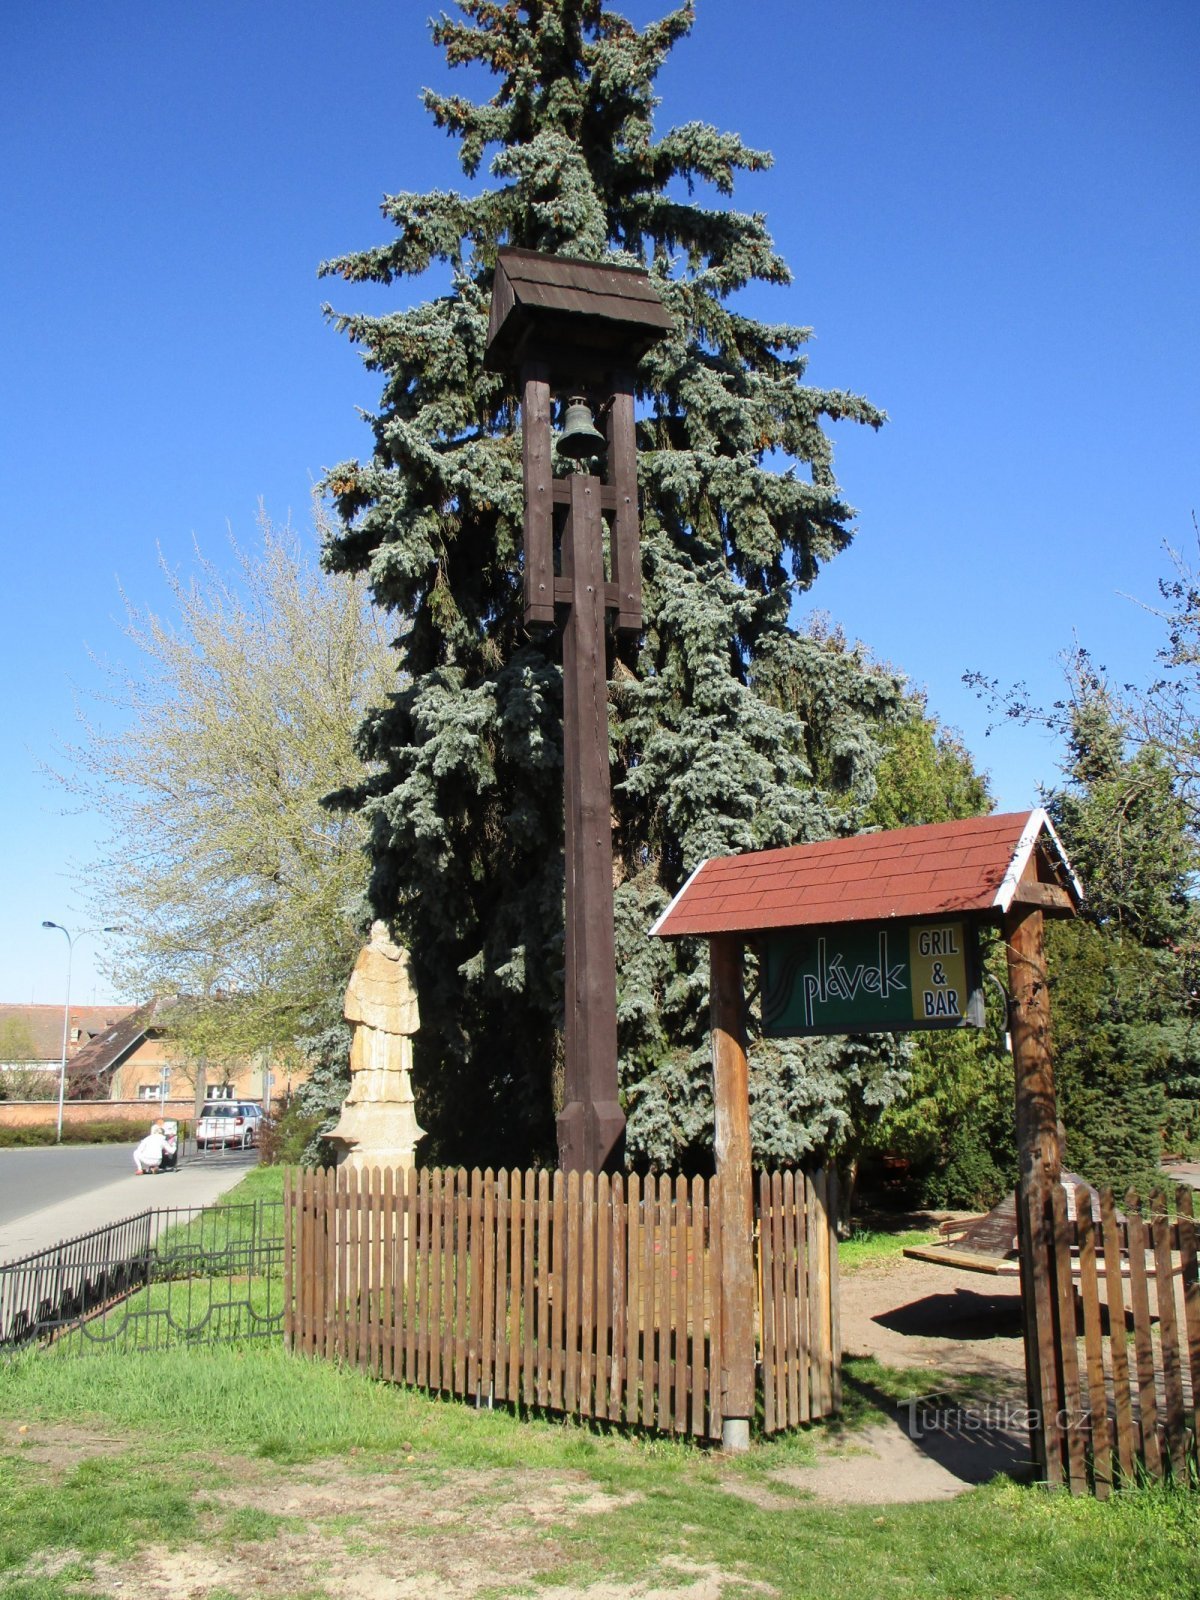 Zvonik u Hrázki (Hradec Králové, 8.4.2020. travnja XNUMX.)